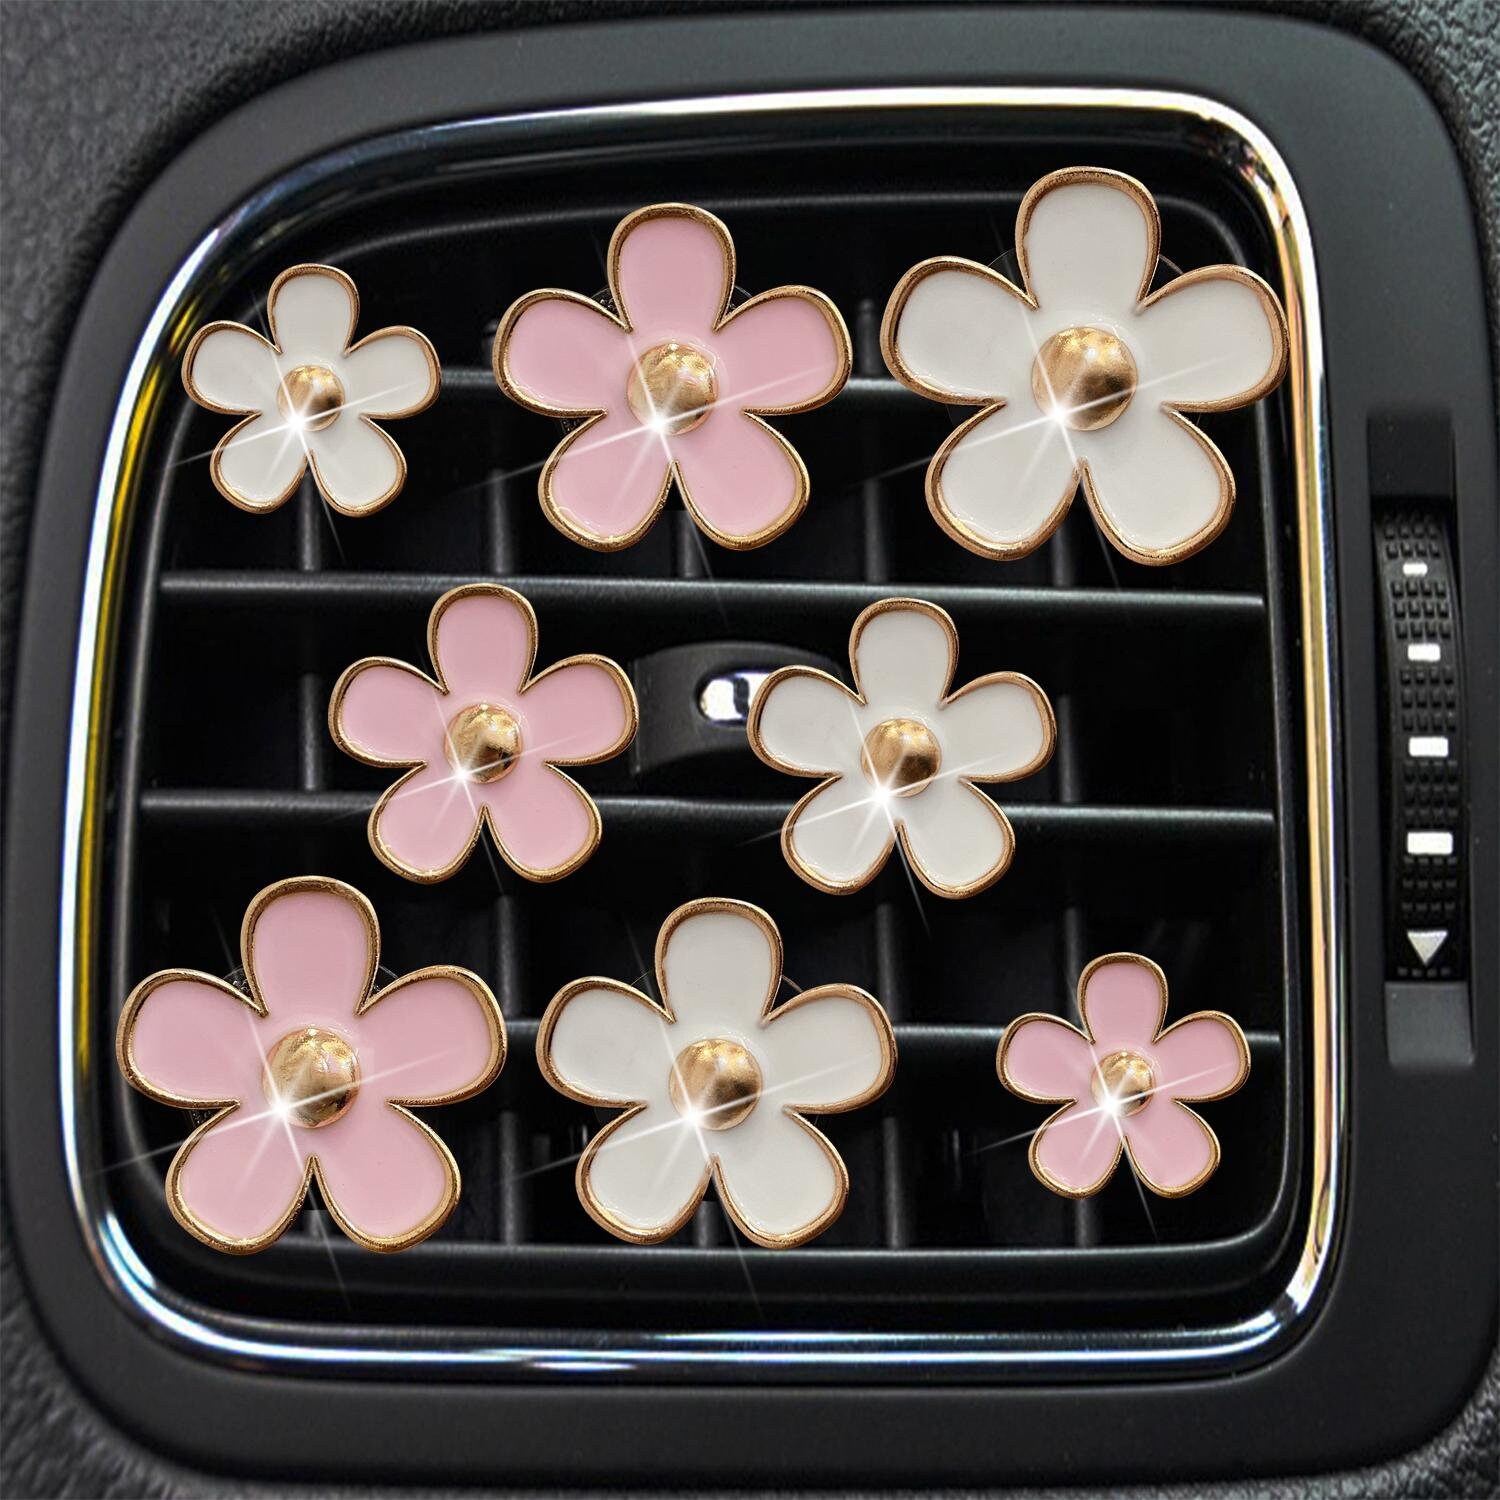 4pcs Cherry Blossom Car Vent Clip Clay Flower Car Accessory 